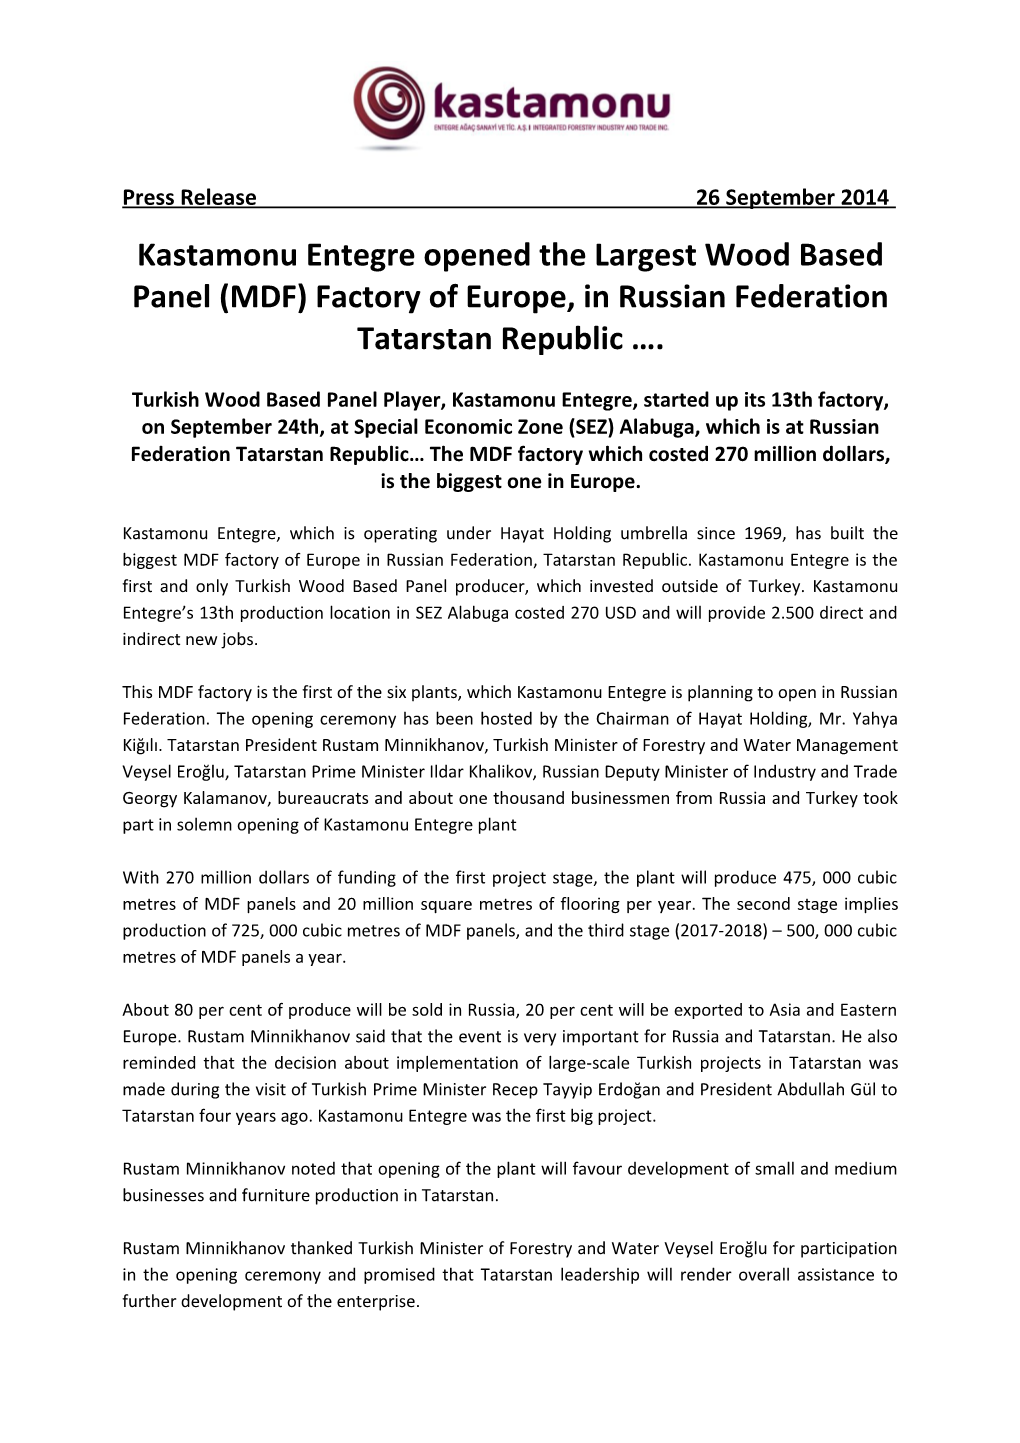 Kastamonu Entegre Opened the Largest Wood Based Panel (MDF) Factory of Europe, Inrussian